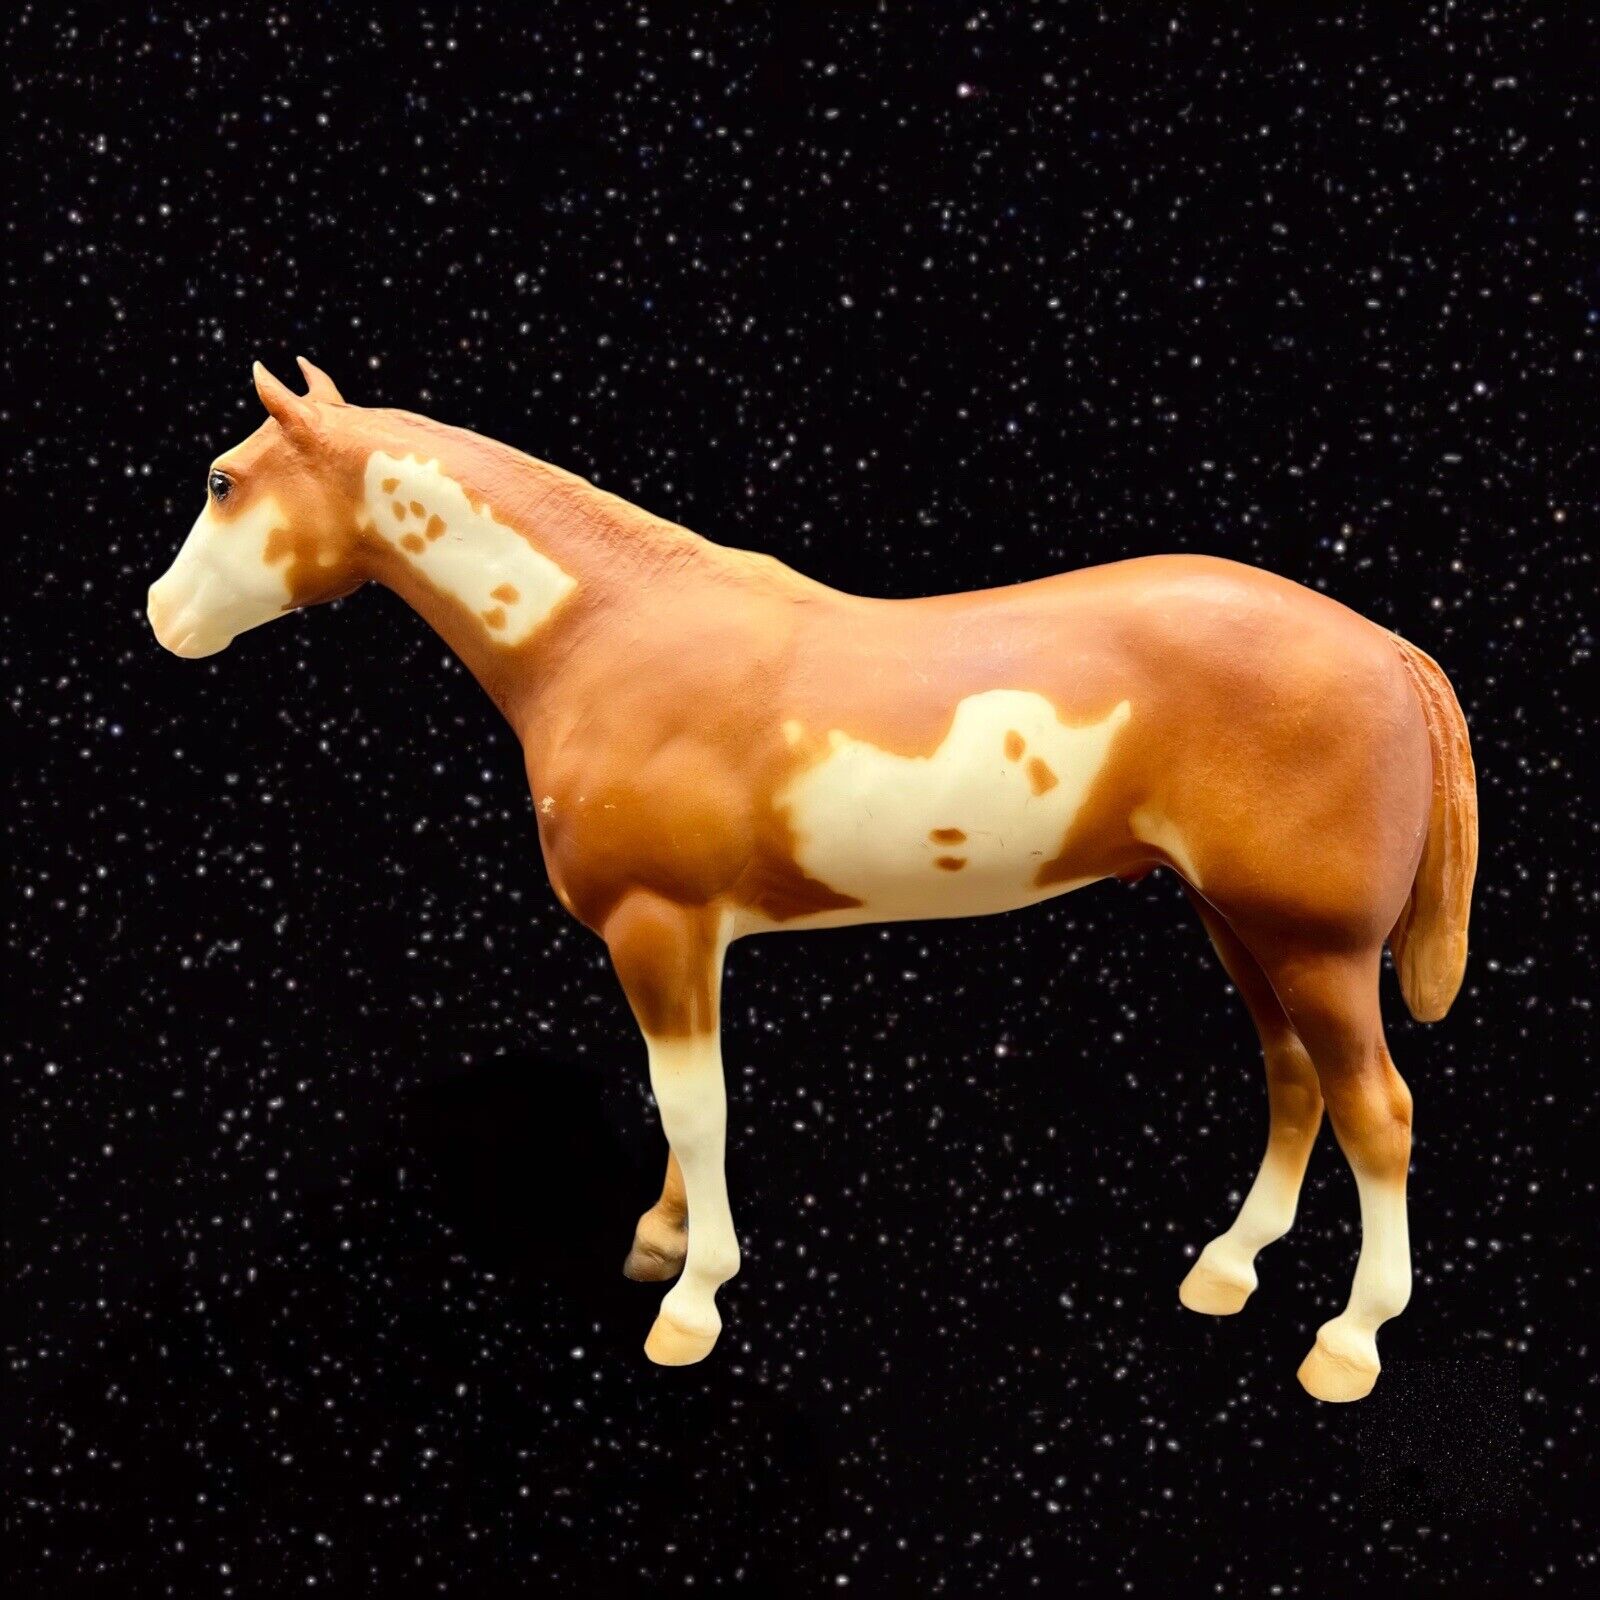 Vintage Breyer Molding USA Horse Light Brown W White Spots 3 White Legs 8”t 11”w